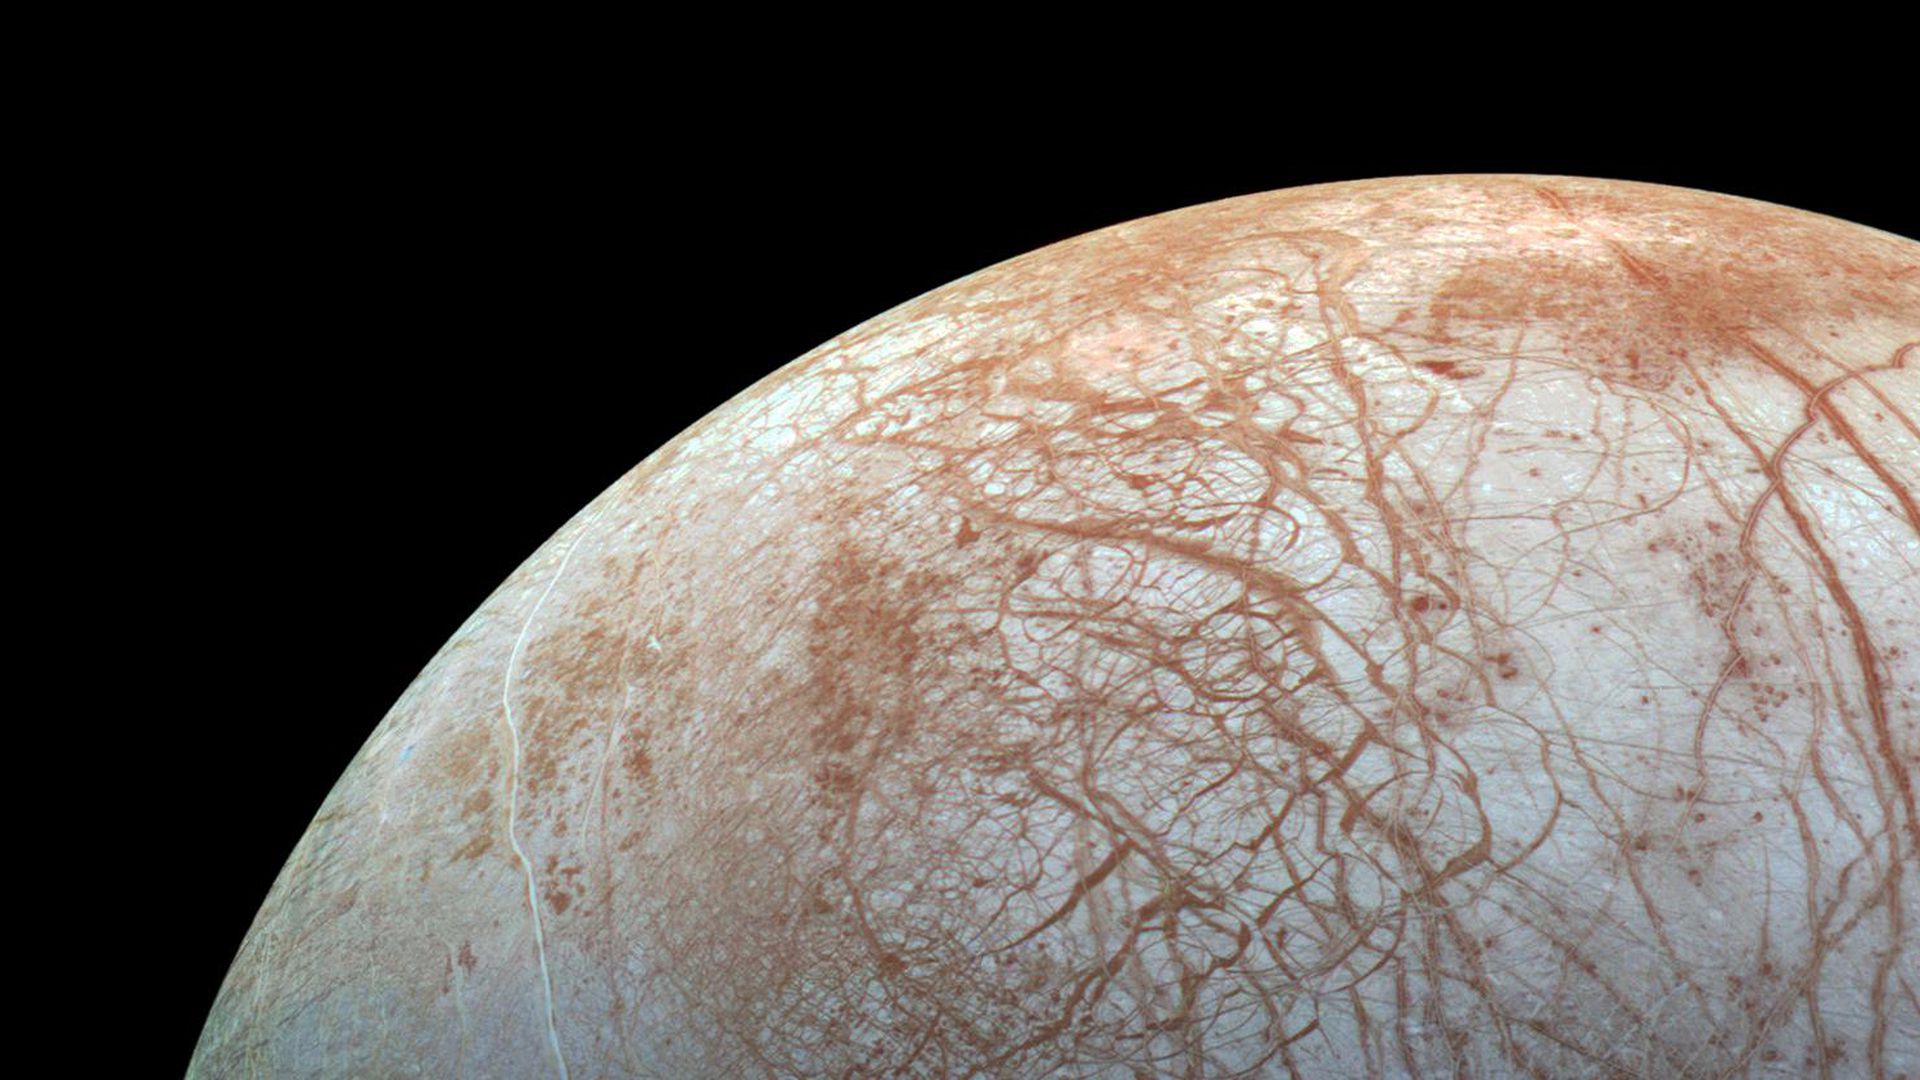 The secrets hiding under Europa's ice